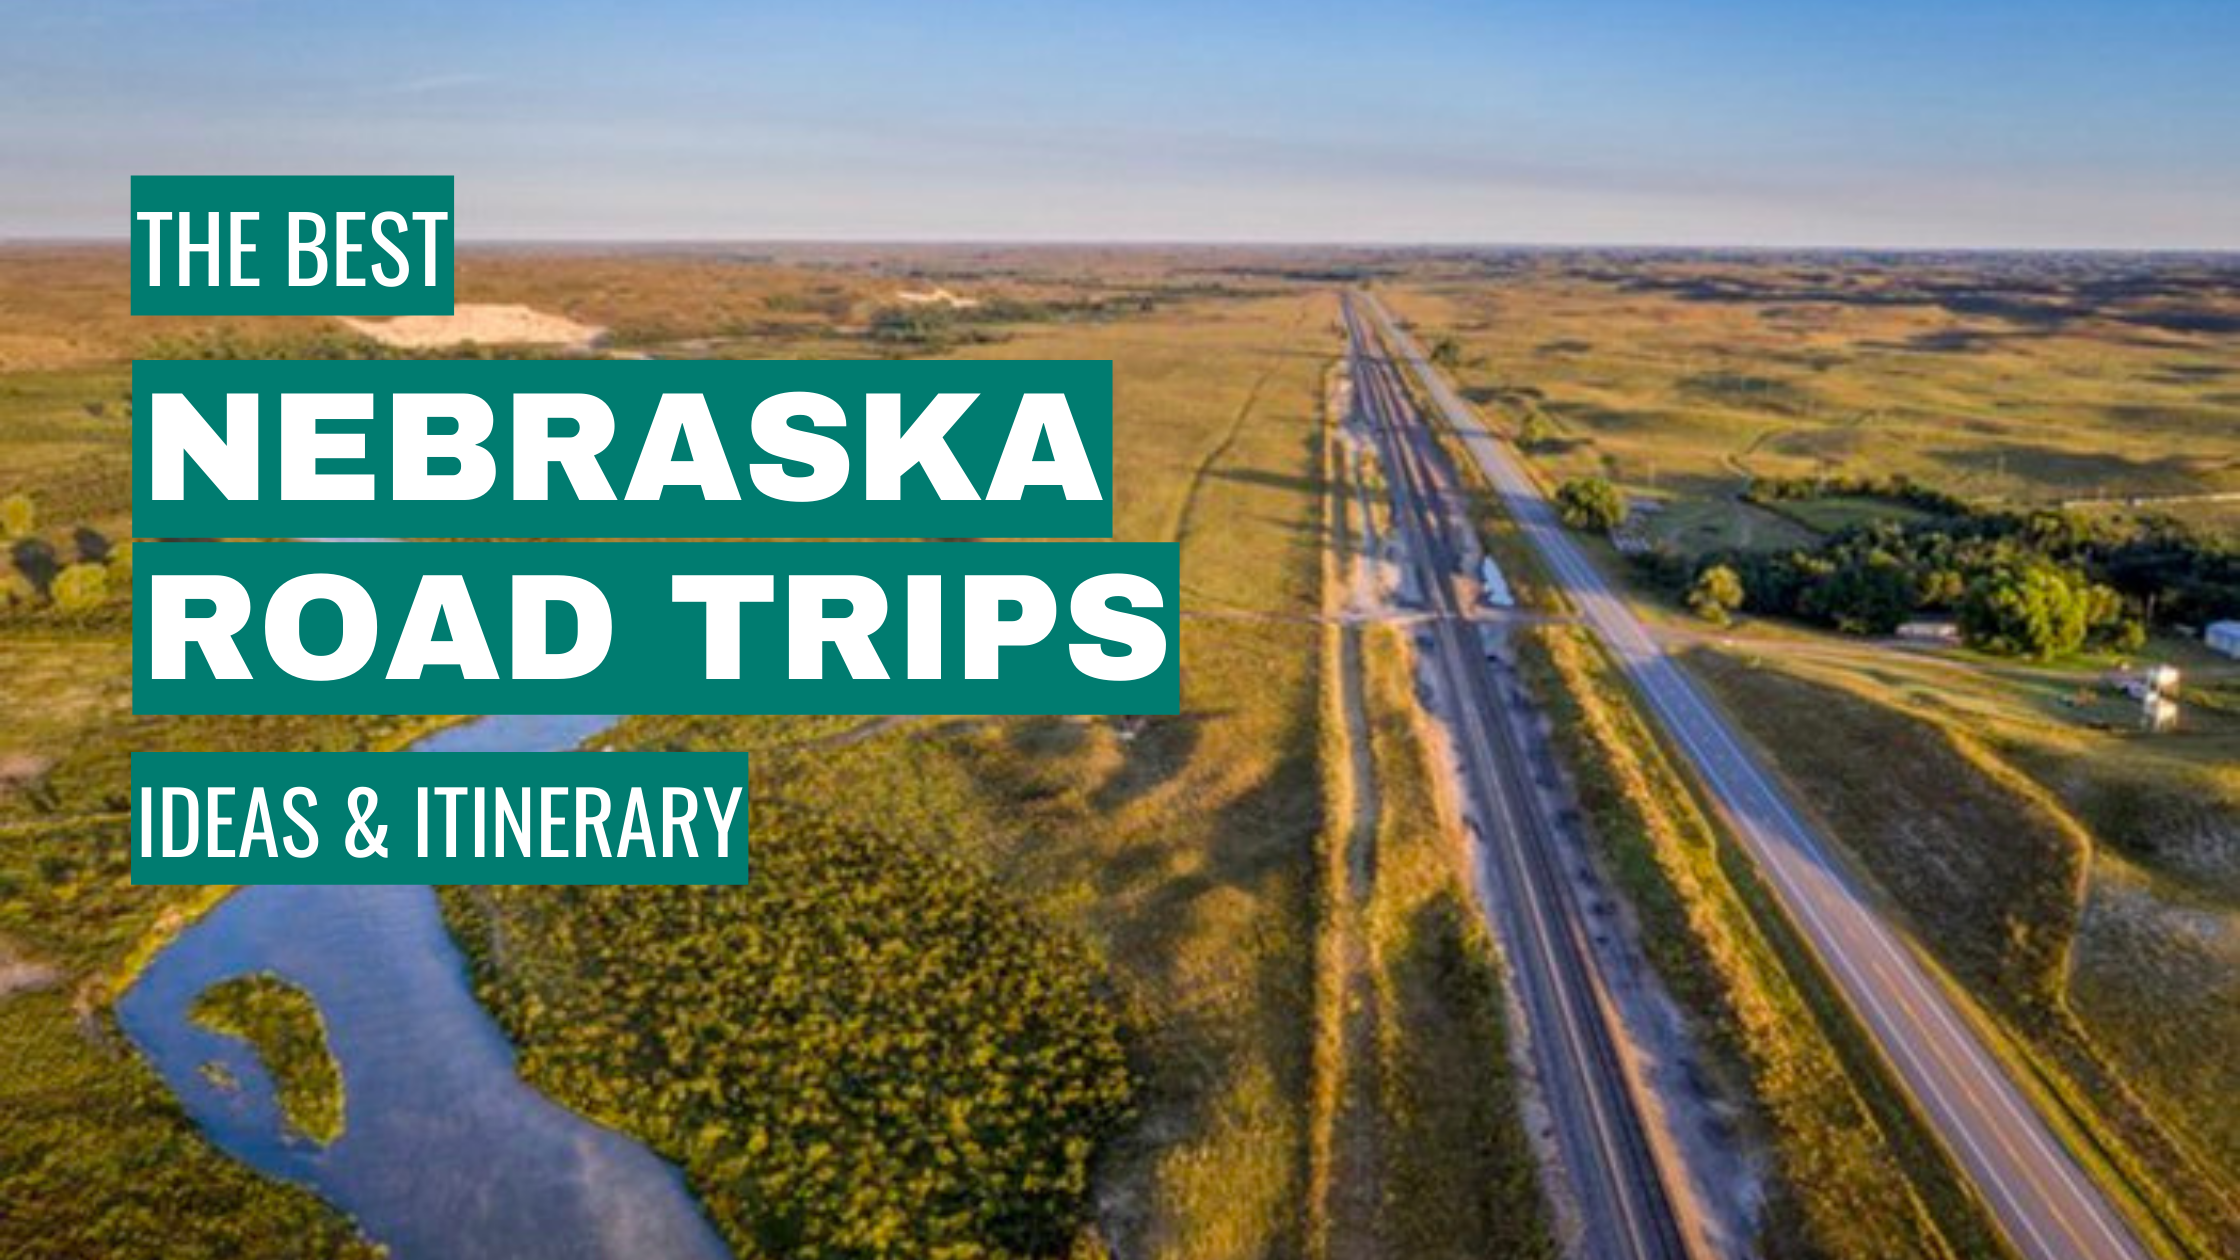 Nebraska Road Trip Ideas: 11 Best Road Trips + Itinerary